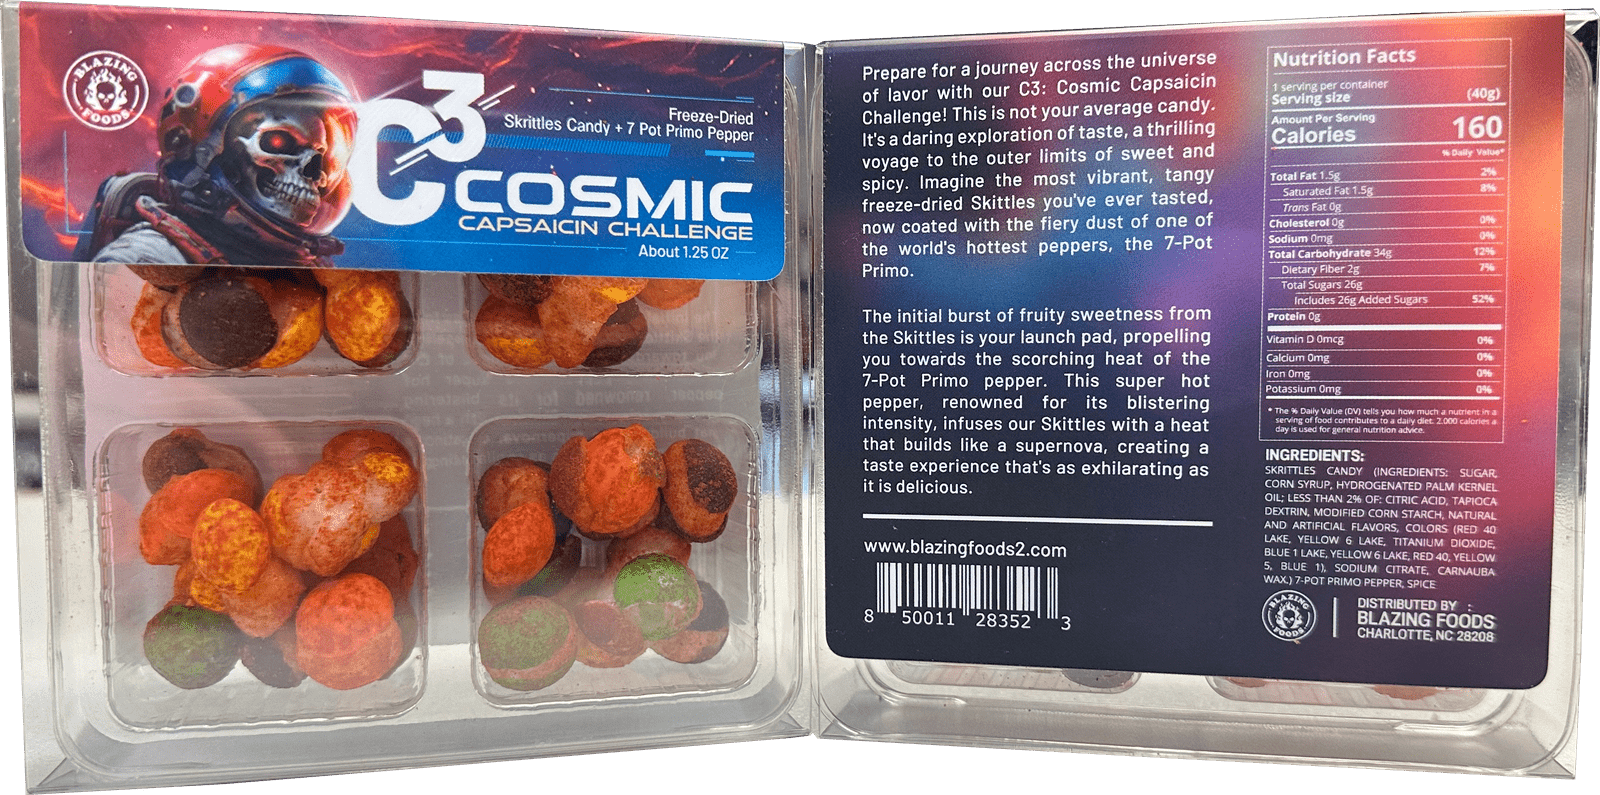 C3 Cosmic Capsaicin Challenge - Freeze Dried Skrittles + 7-P